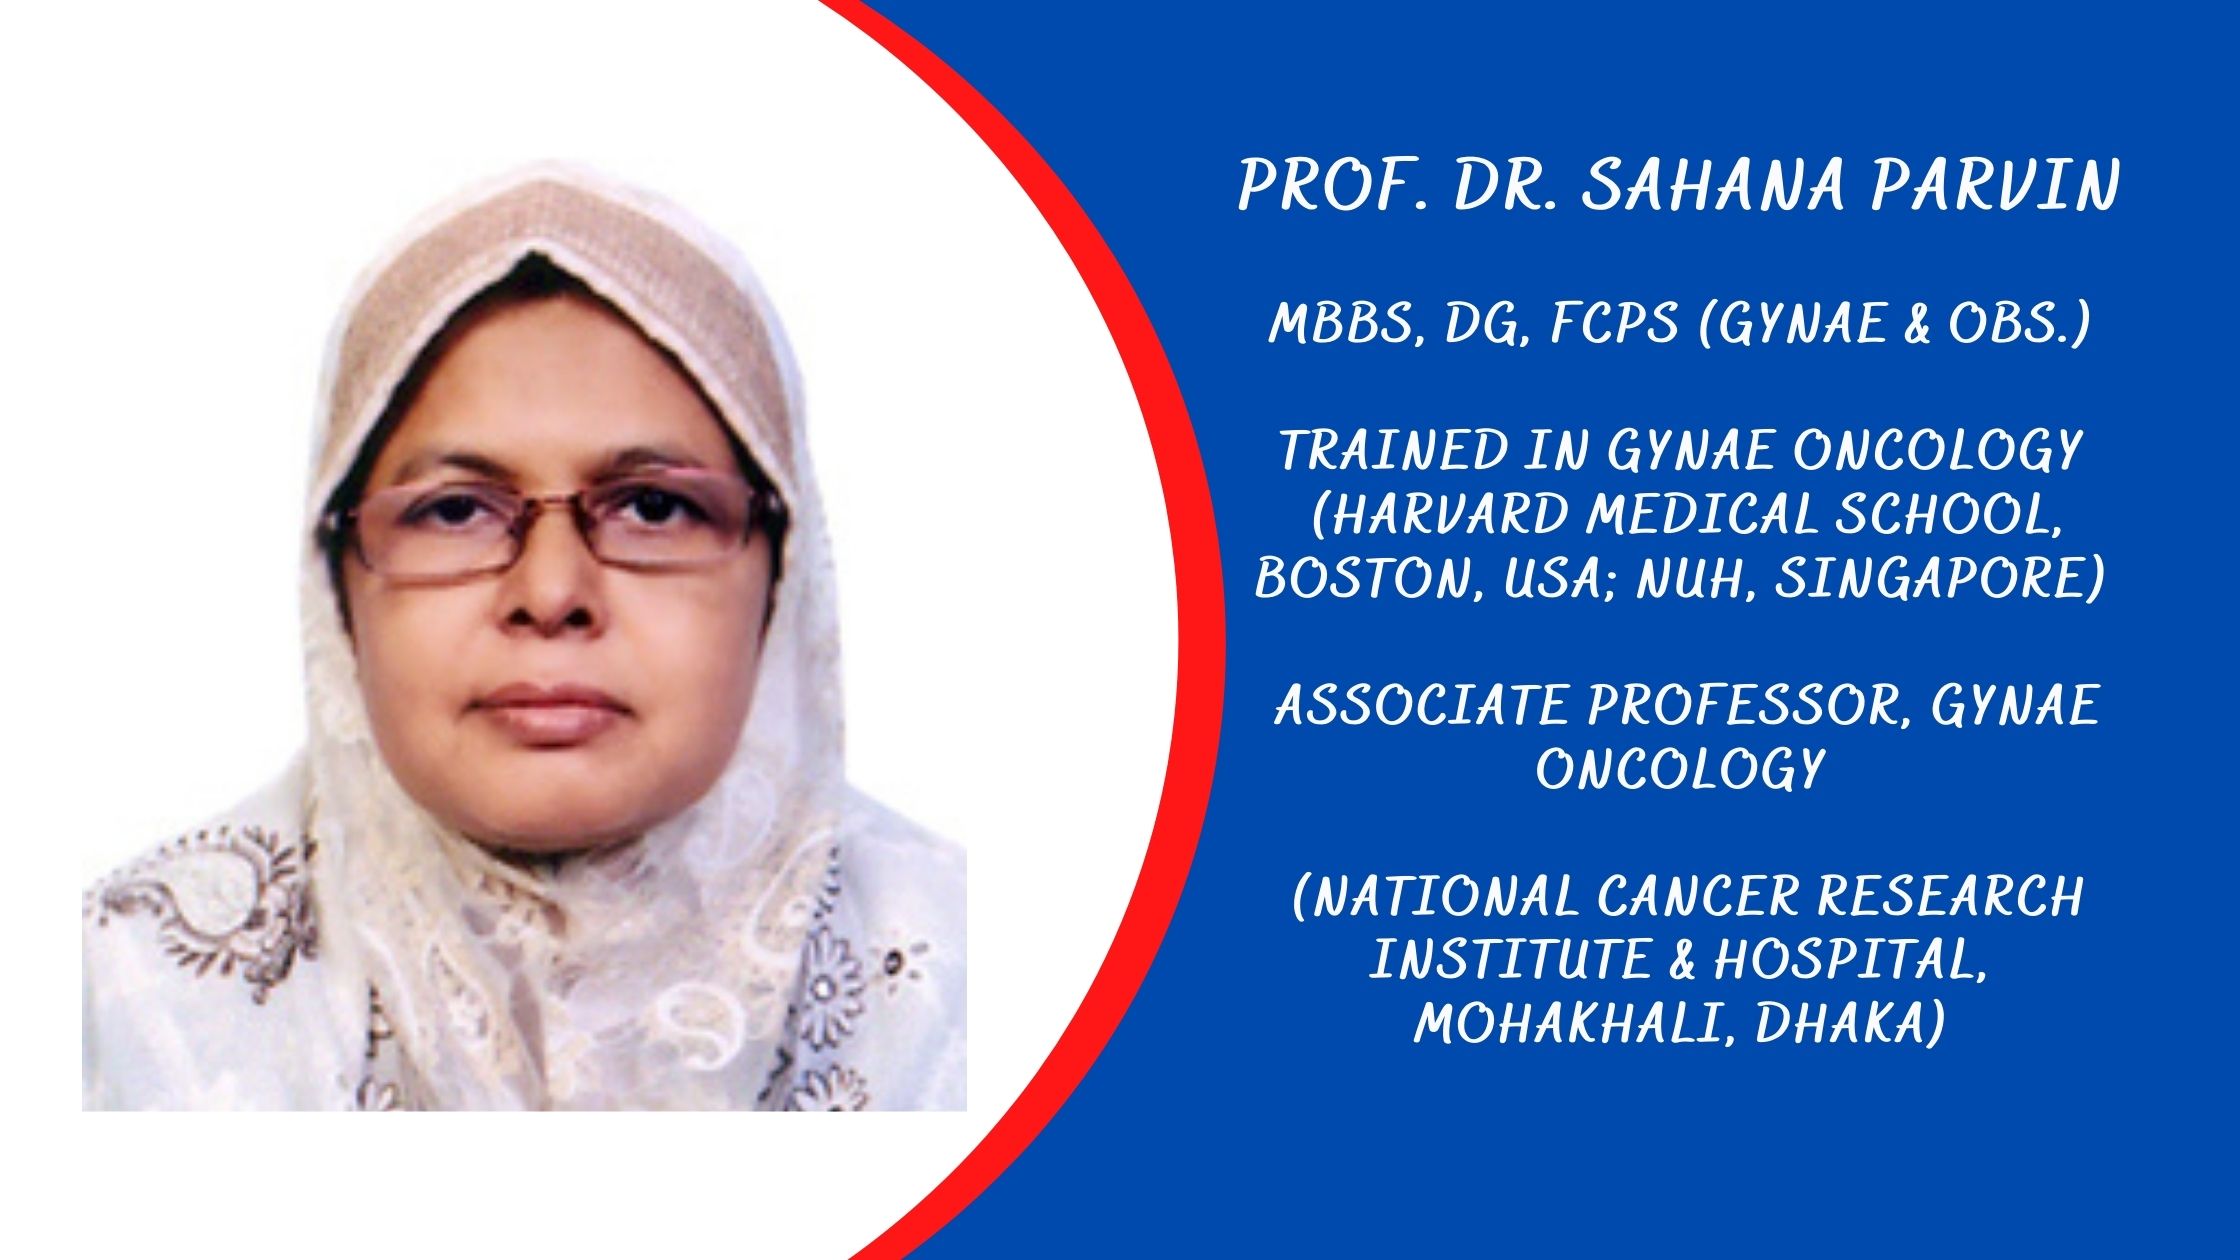 PROF. DR. SAHANA PARVIN BEST GYNAE & OBS SPECIALIST